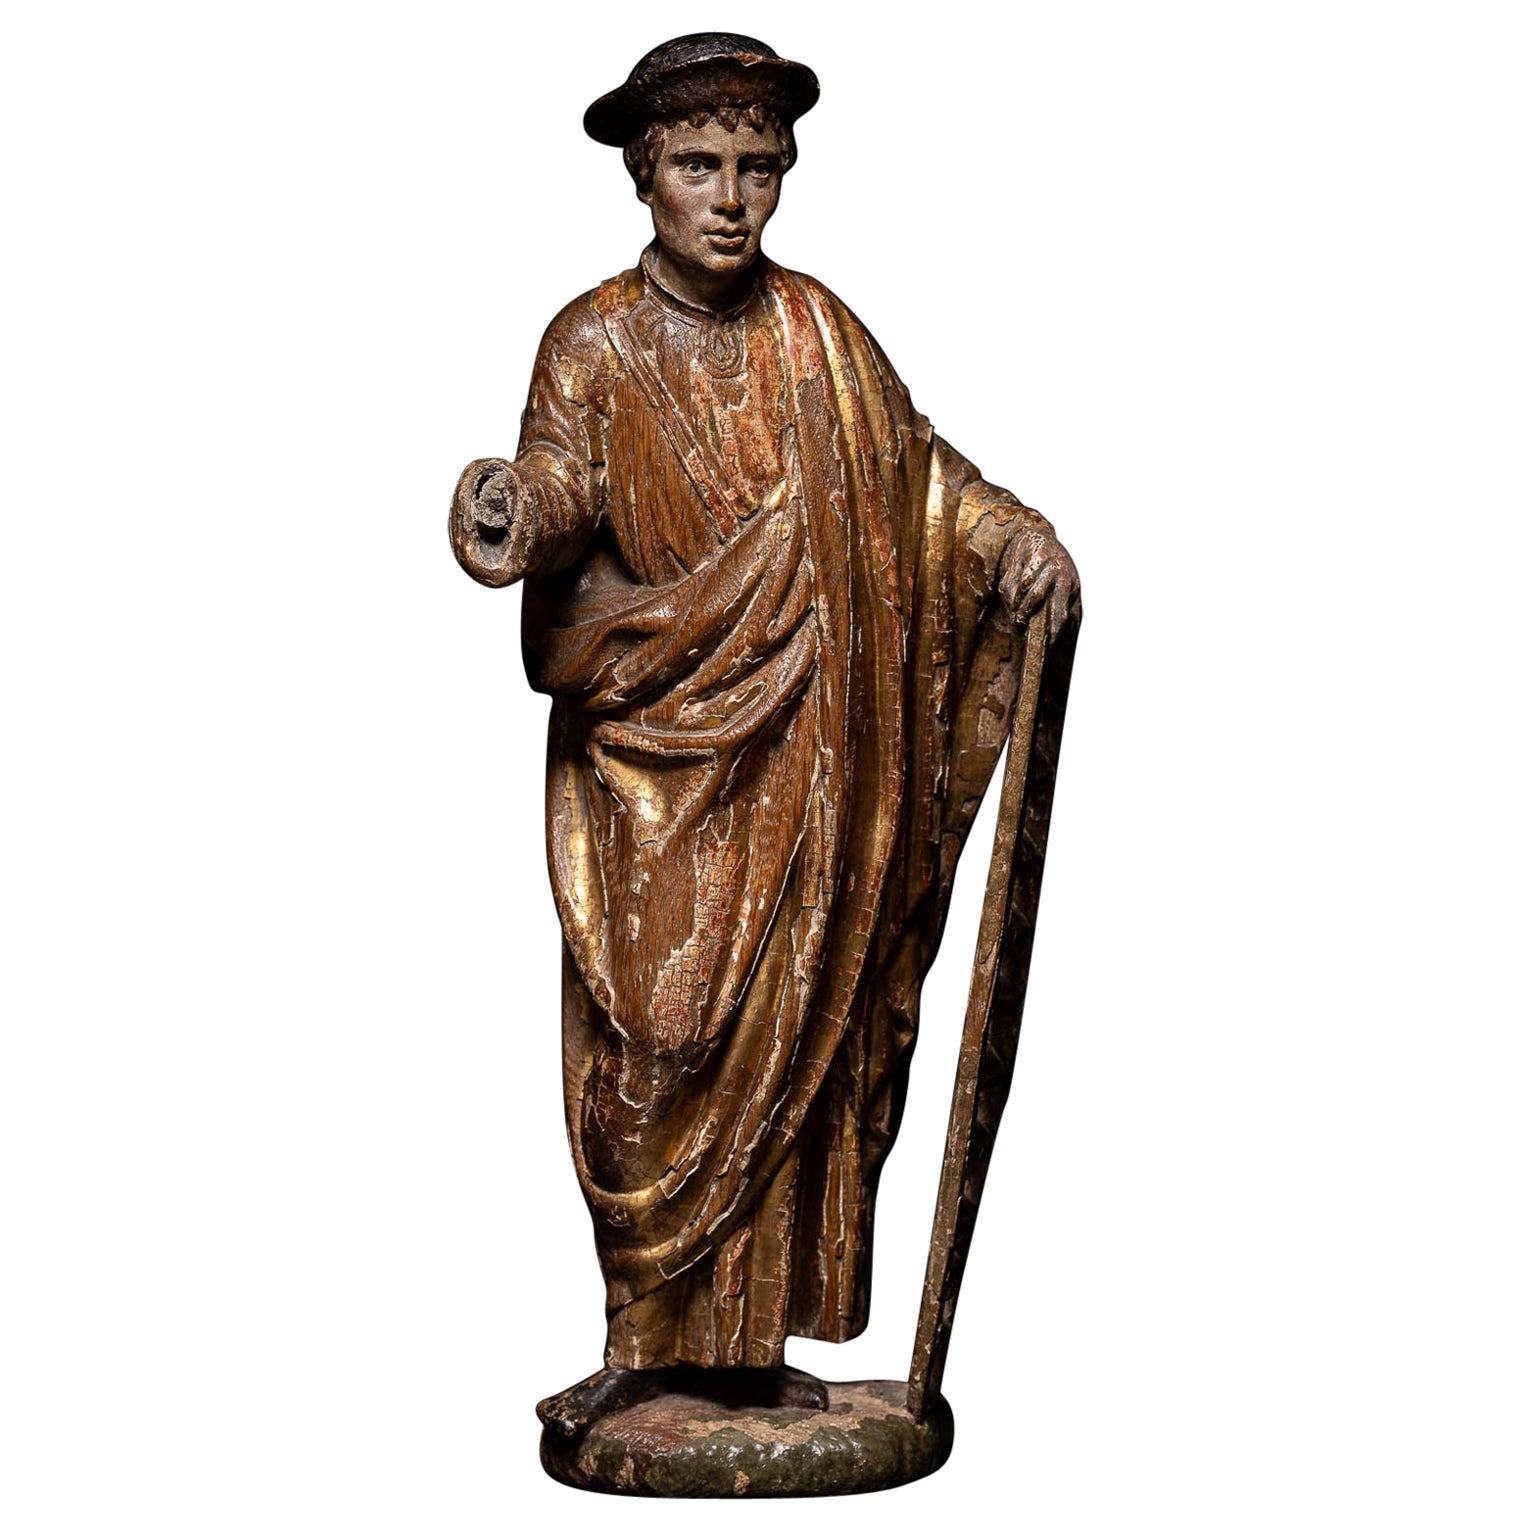 Polychromed Statue representing Sint Alexis of Edessa. Flemish school, Belgium